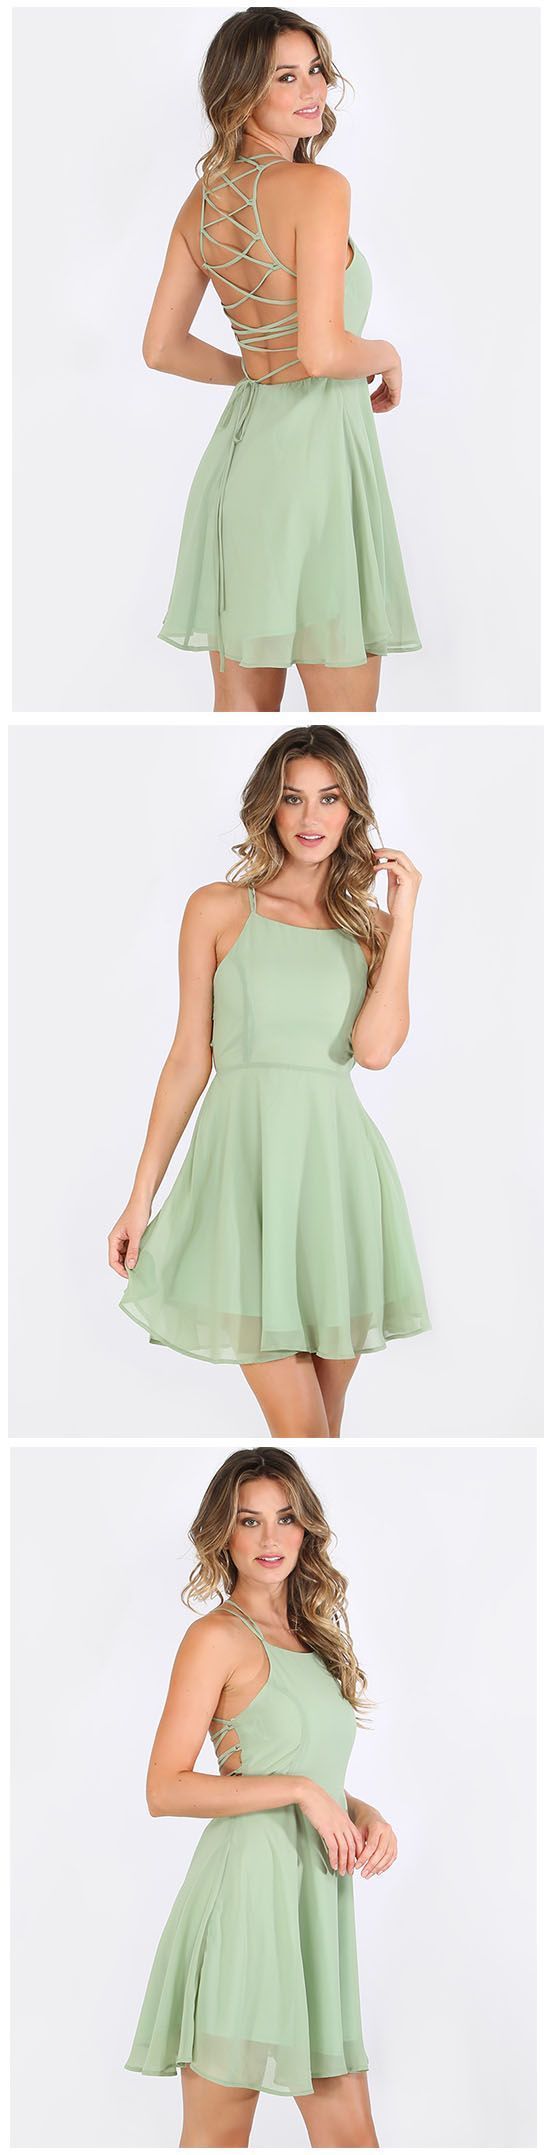 Cheap Gowns Homecoming Dresses Chiffon Anabella 320